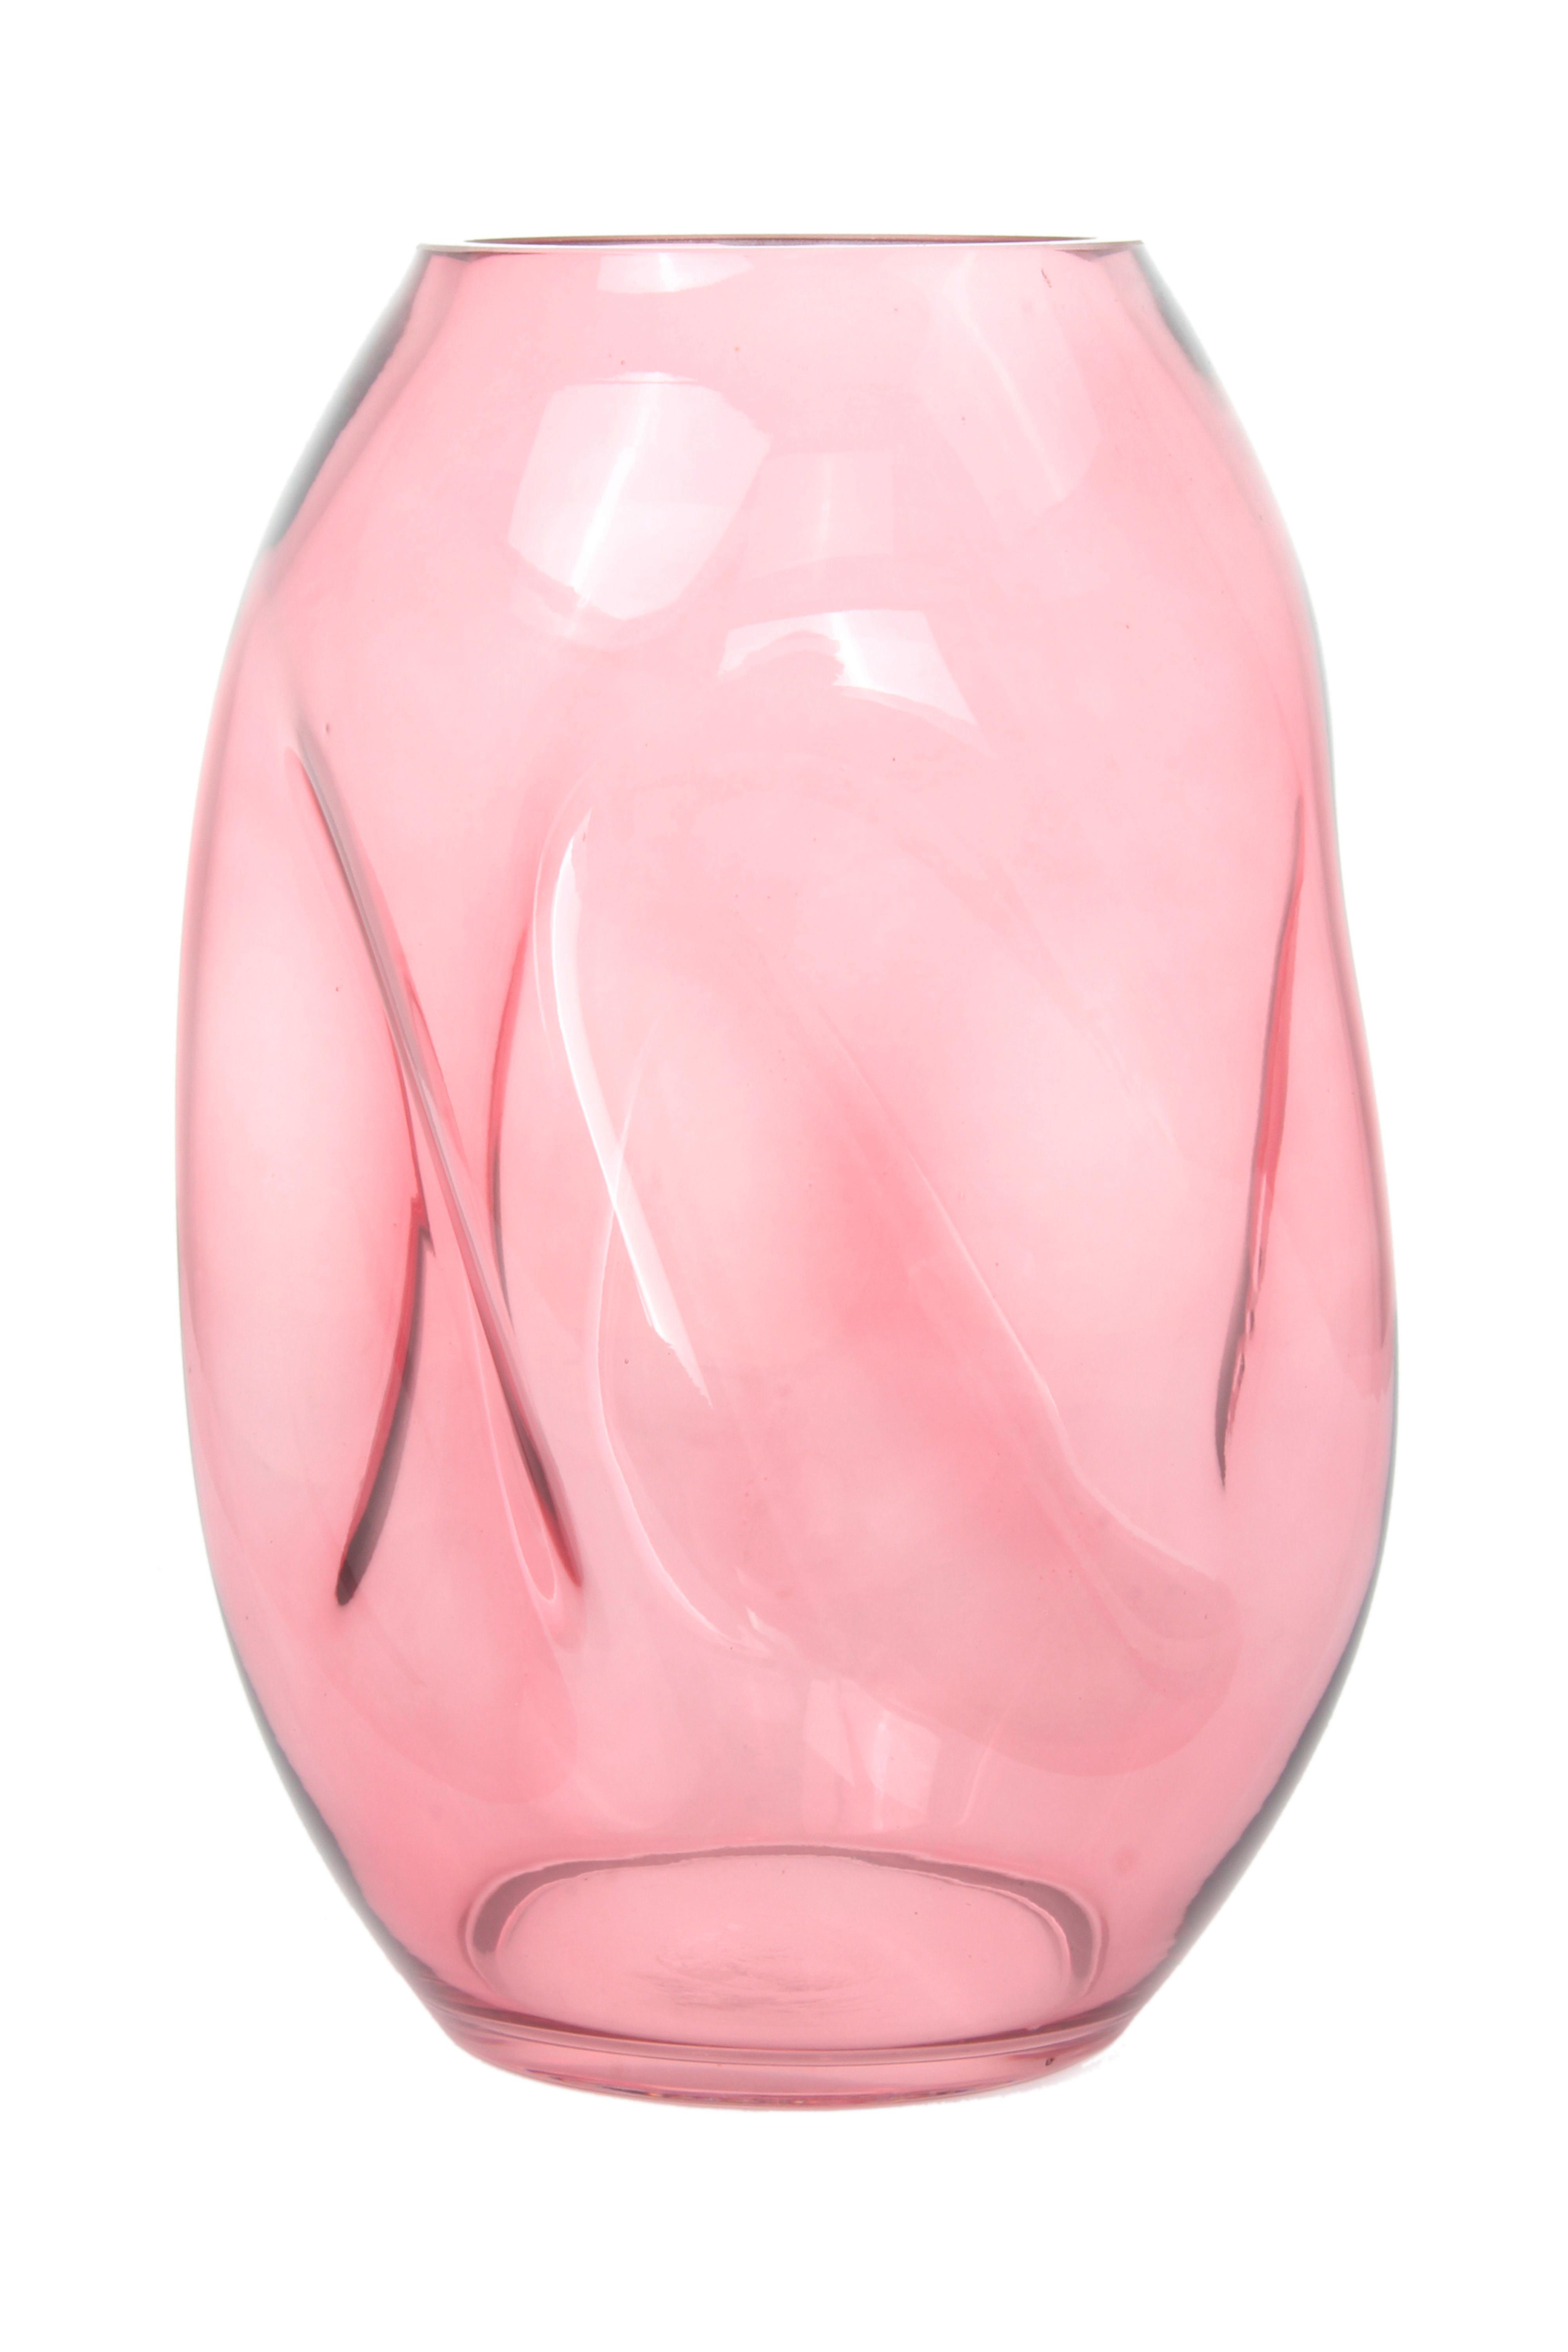 Vase Sidney Zylindrisch Glas Rosa H: 25 cm - Rosa, Design, Glas (15/25/15cm)